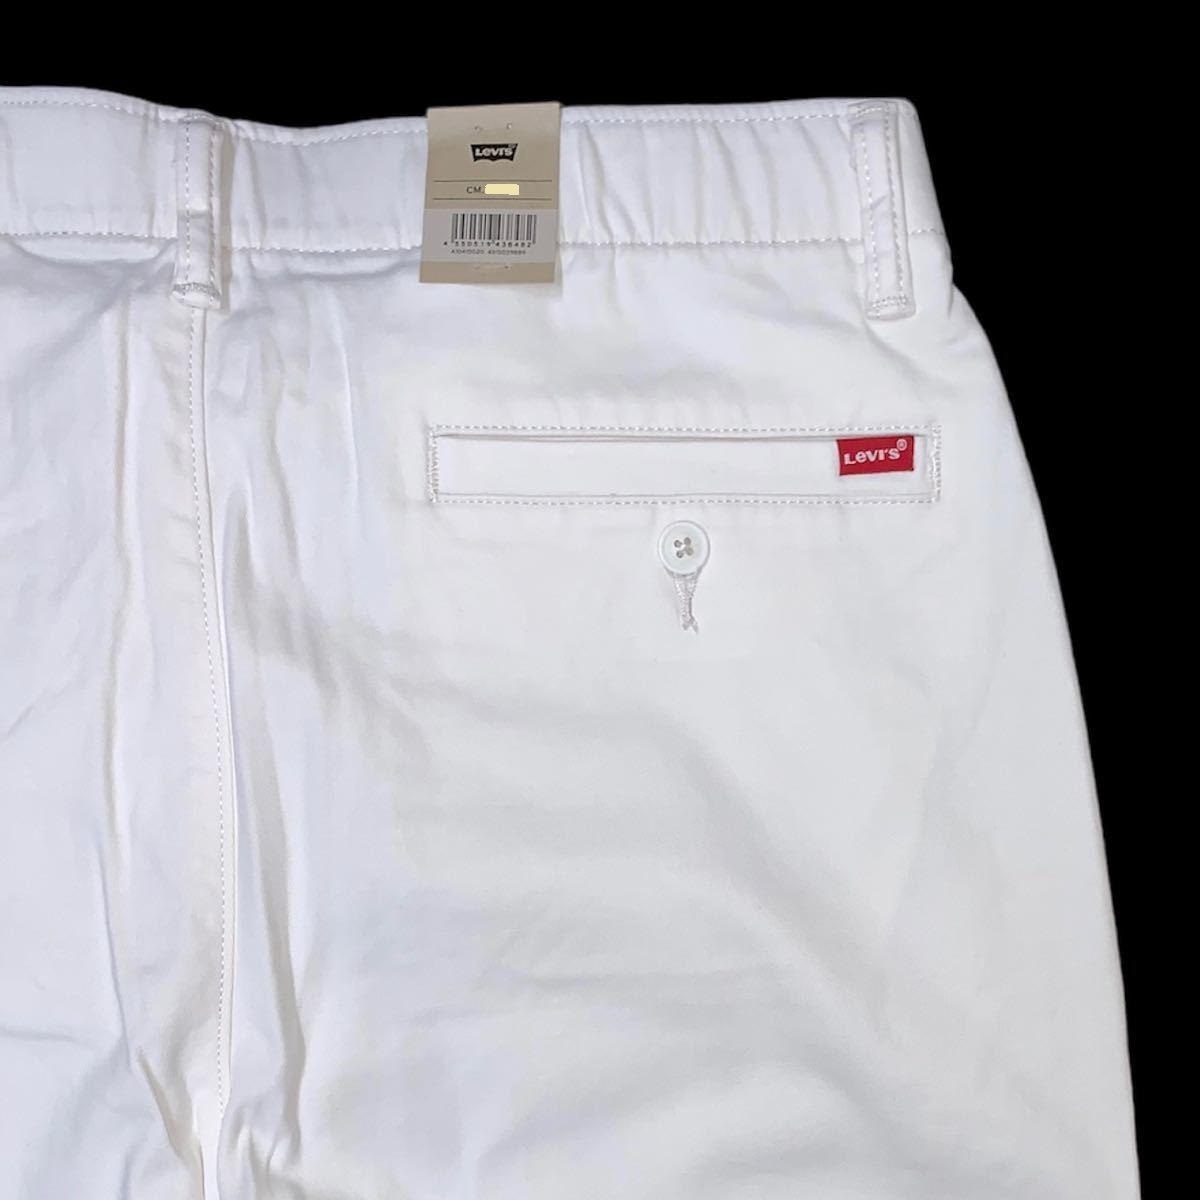  Levi's XX EZ taper chino pants XL size white Levi*s XX CHINO EZ TAPER Zip fly A1041-0020